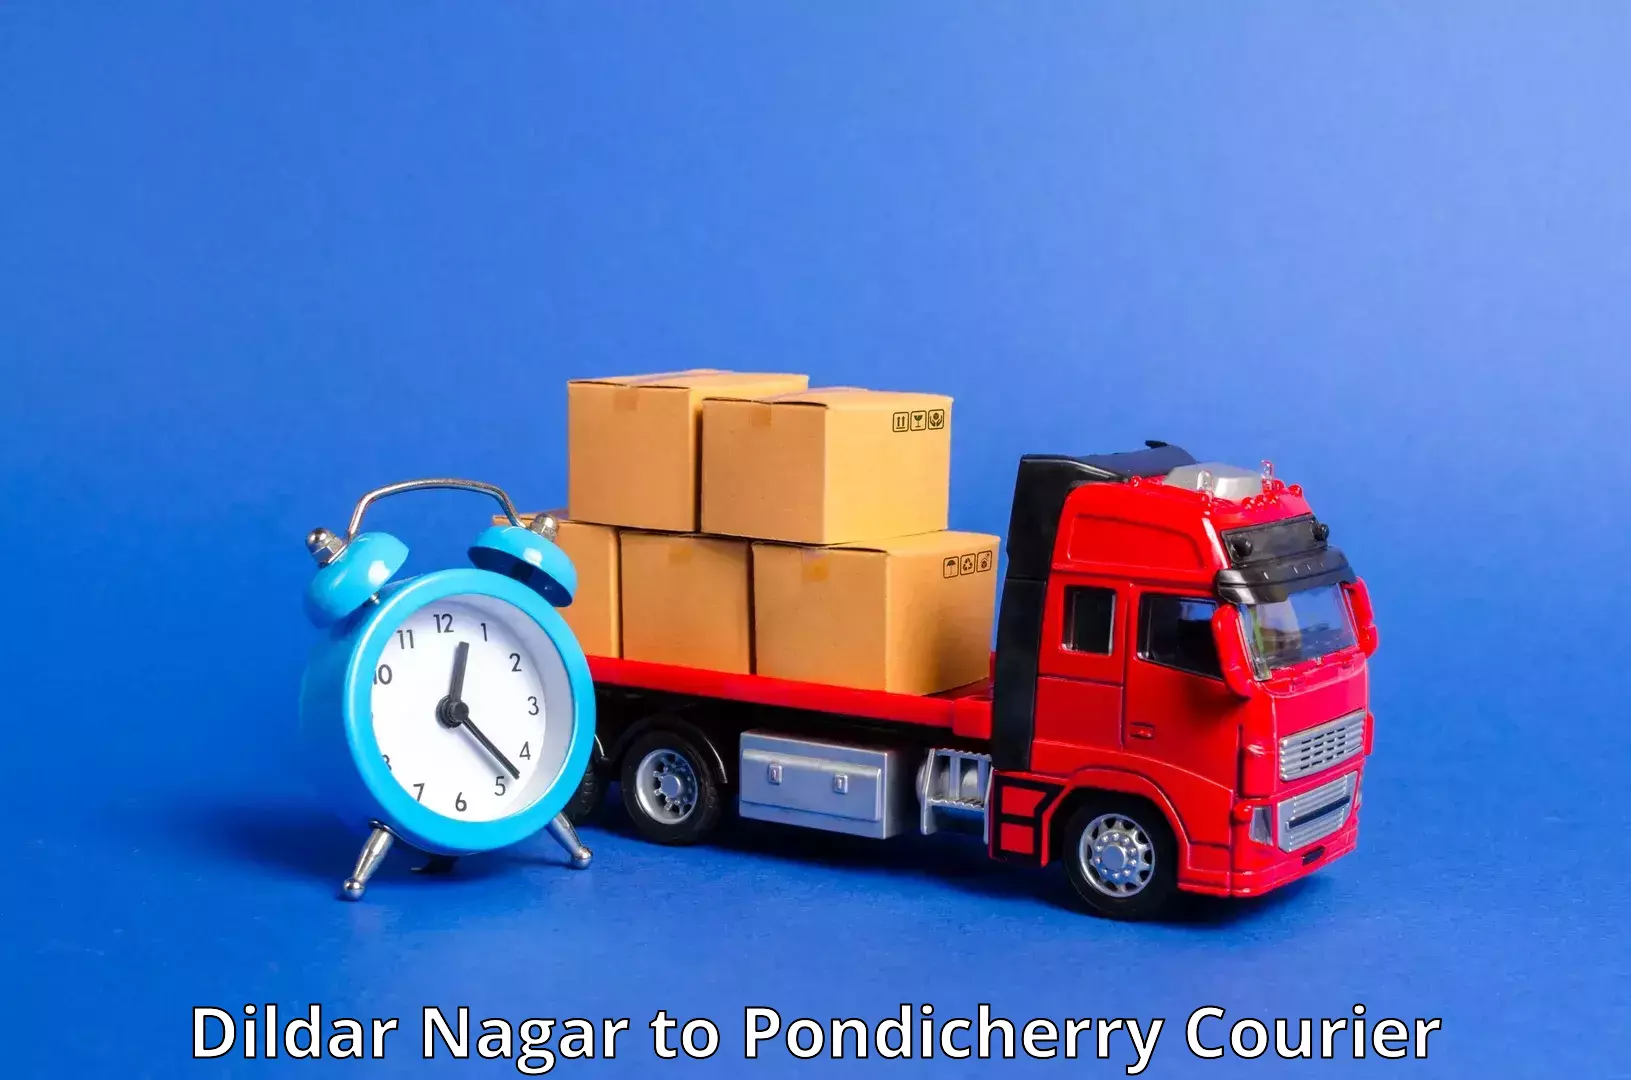 Nationwide delivery network Dildar Nagar to Pondicherry University